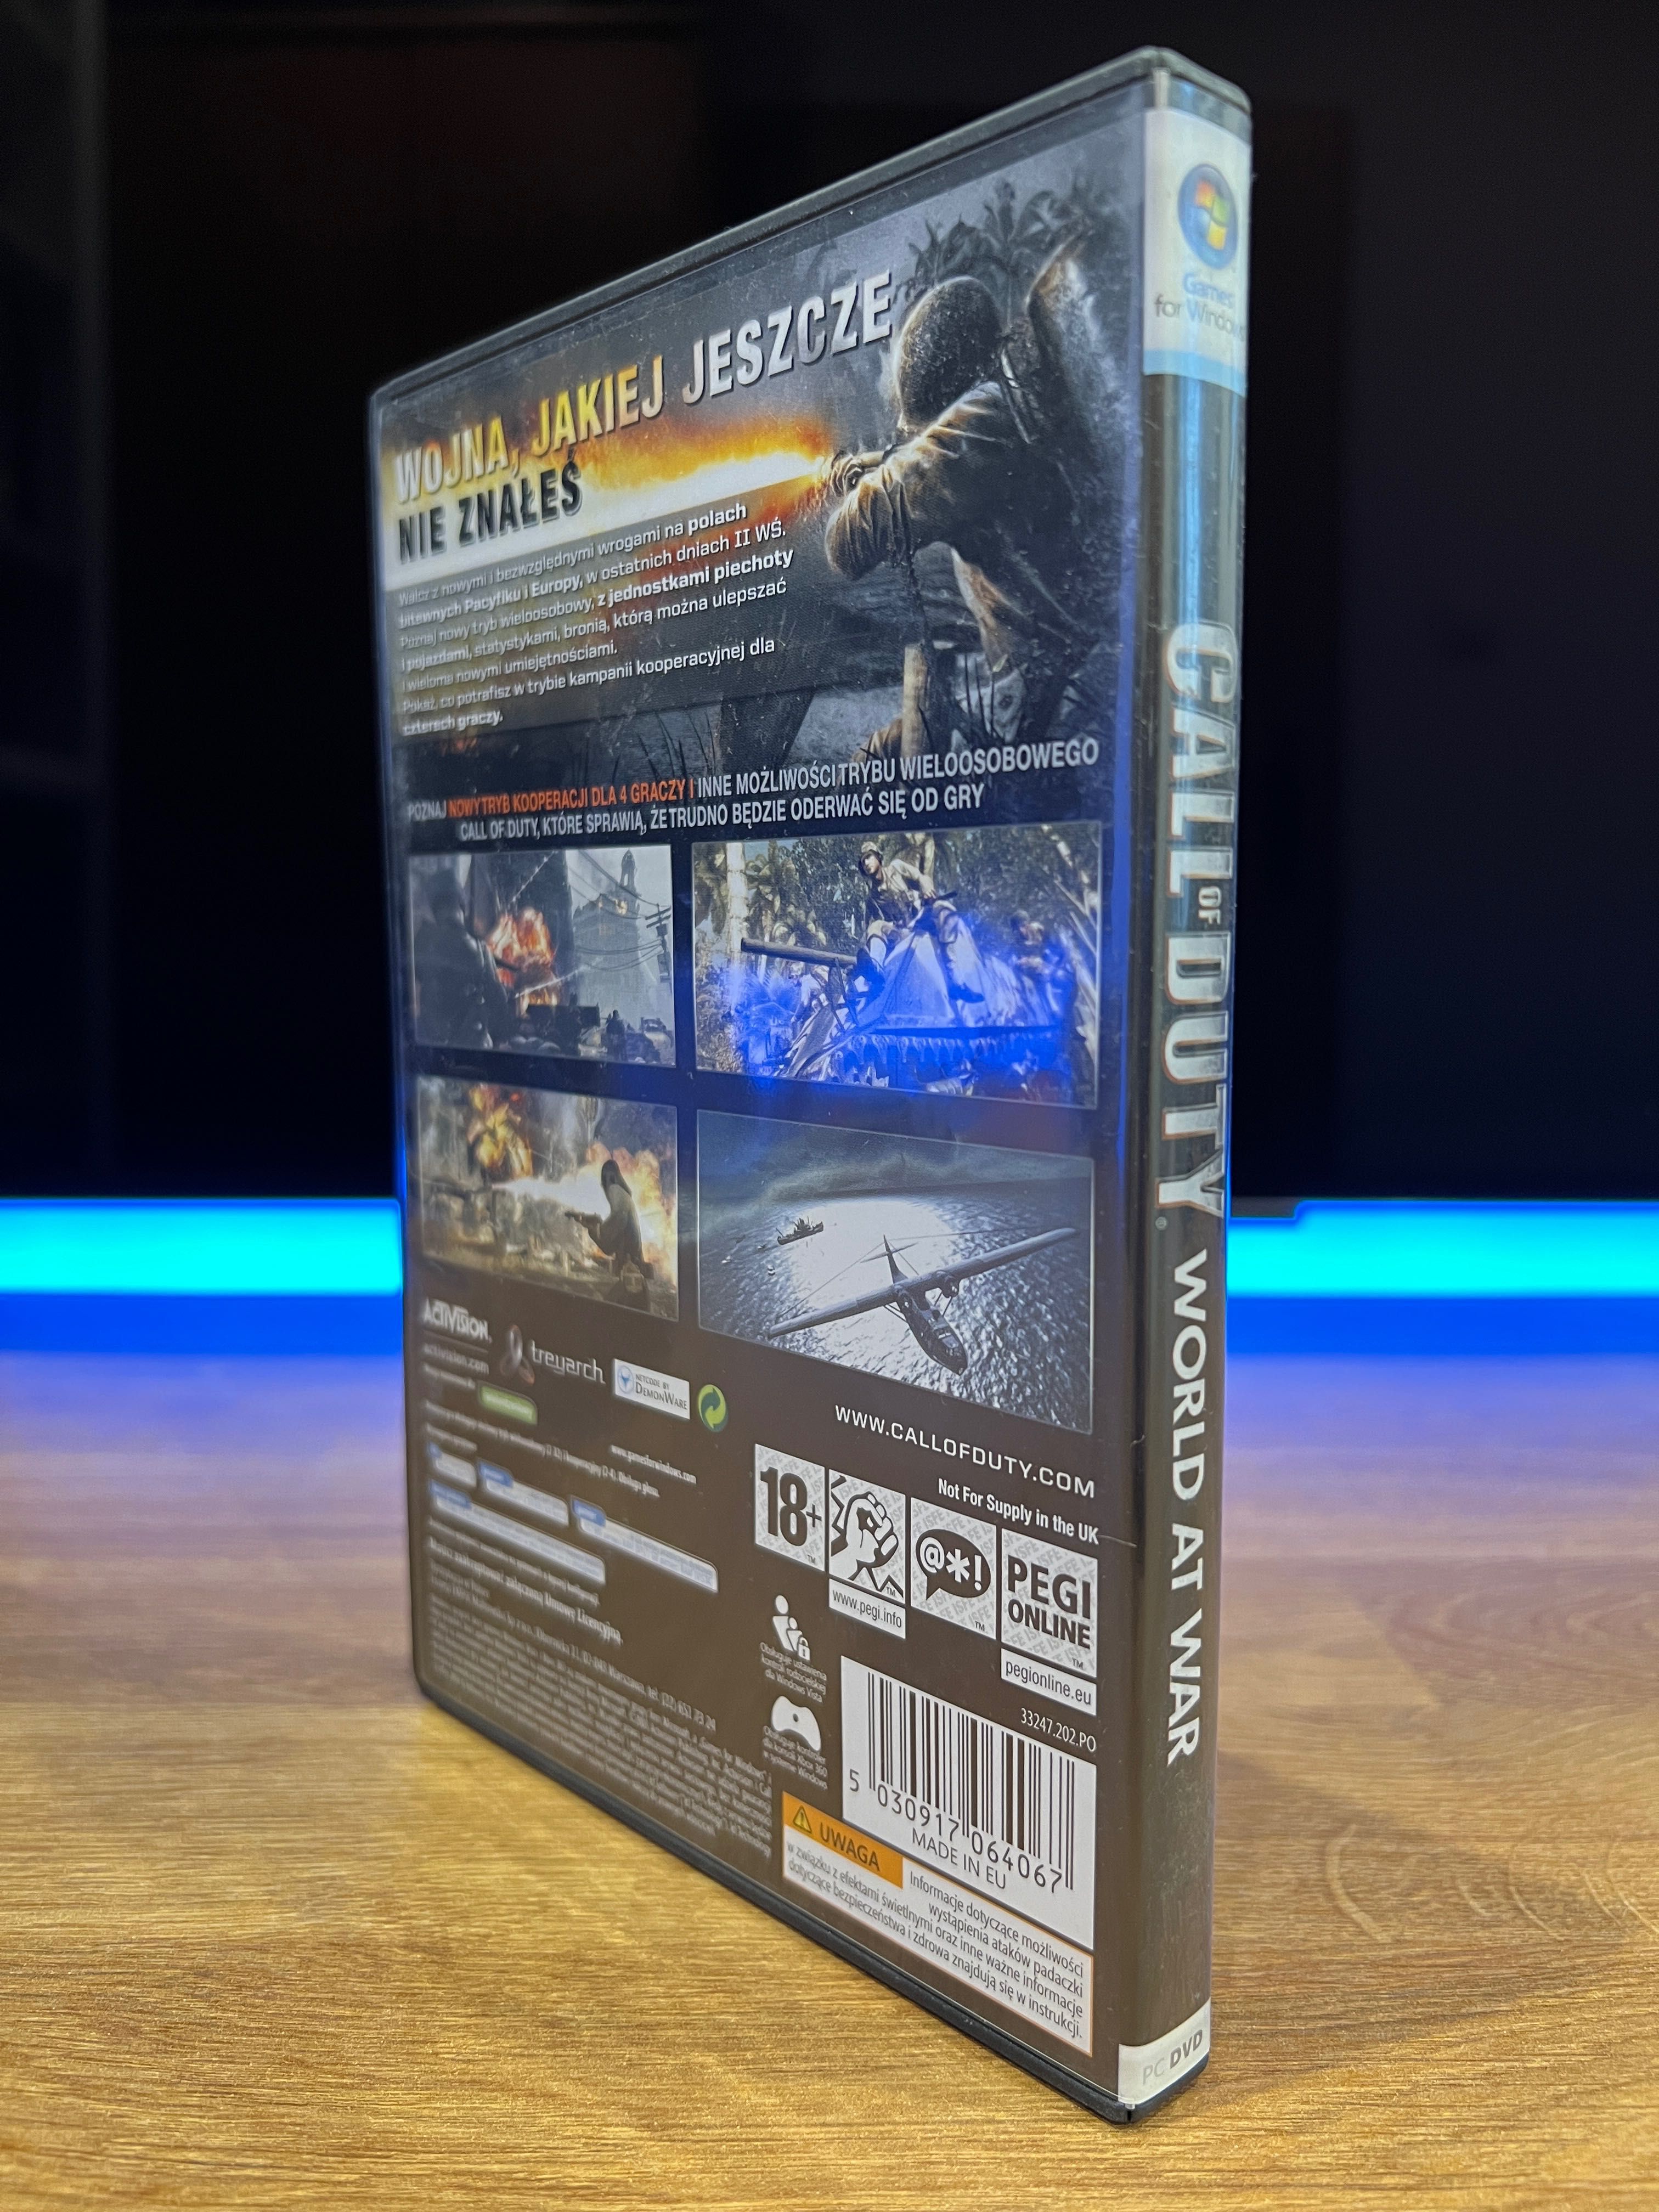 Call of Duty World at War (PC PL 2008) DVD BOX premierowe wydanie